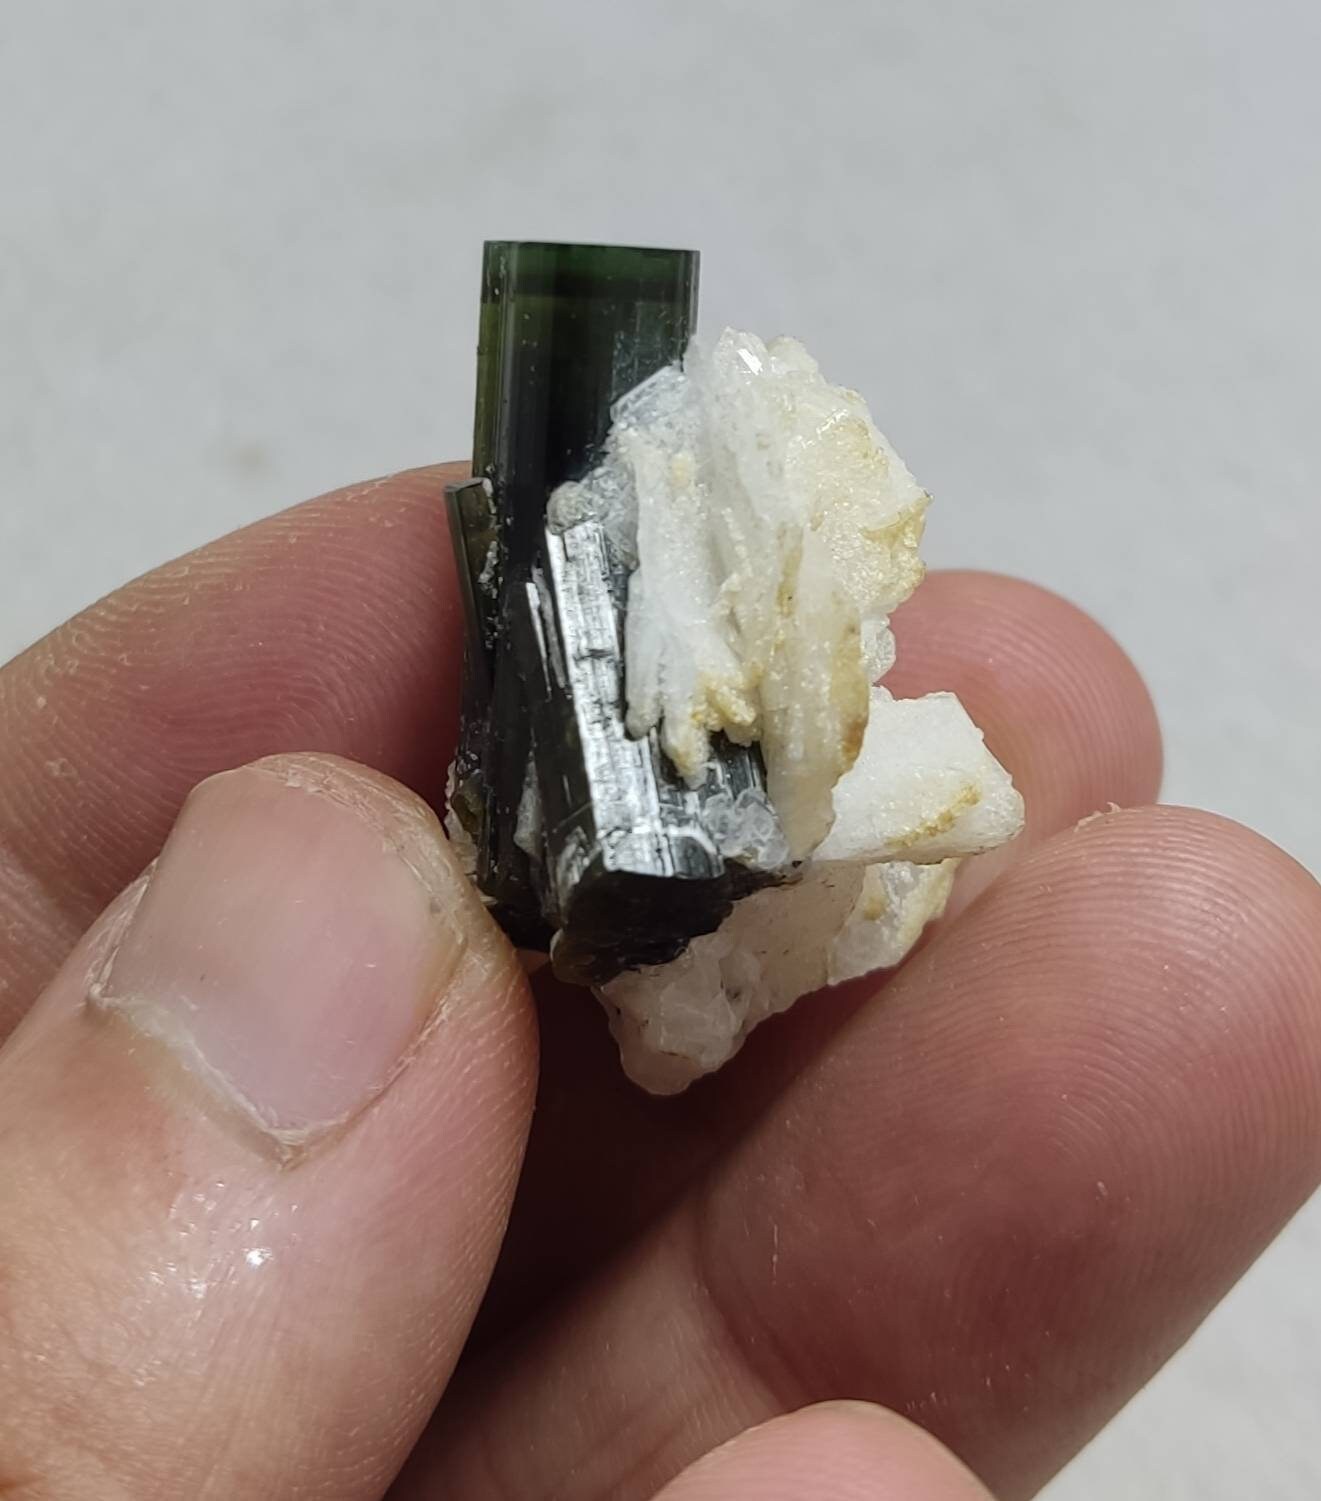 Green cap tourmaline crystal with cleavlandite 13 grams